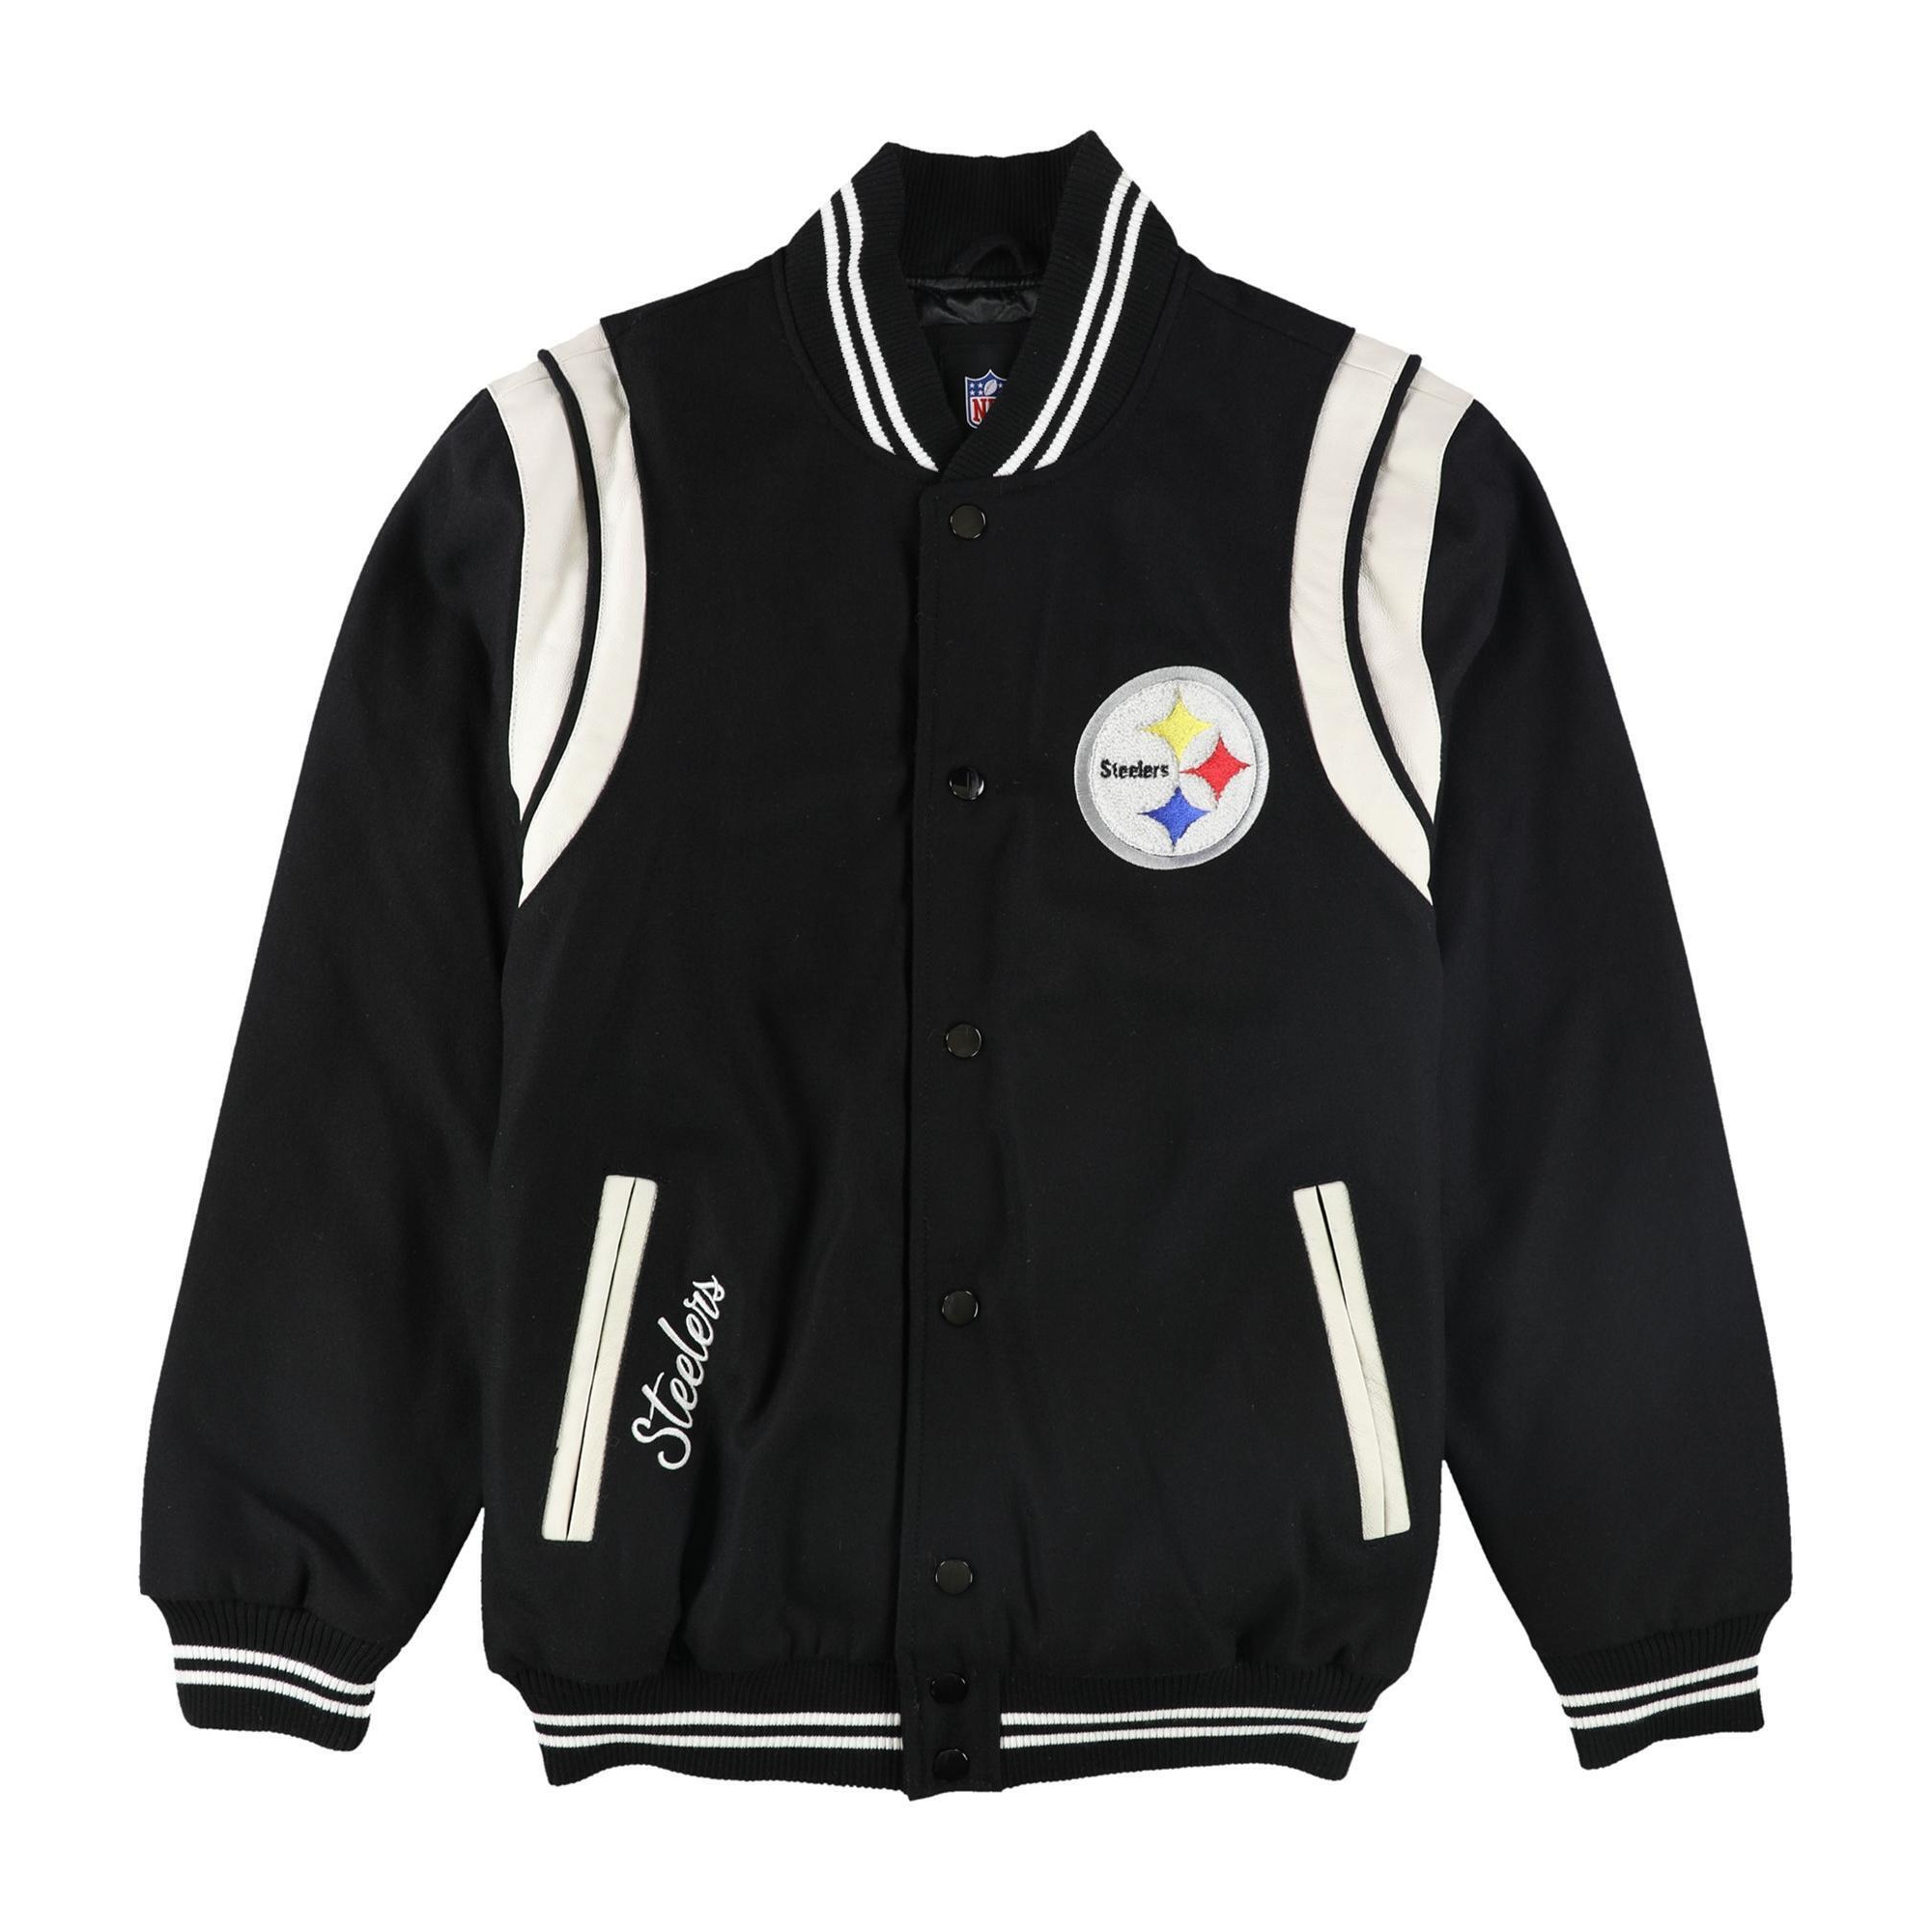 NFL Mens Pittsburgh Steelers Varsity Jacket, Black, Large (Regular)